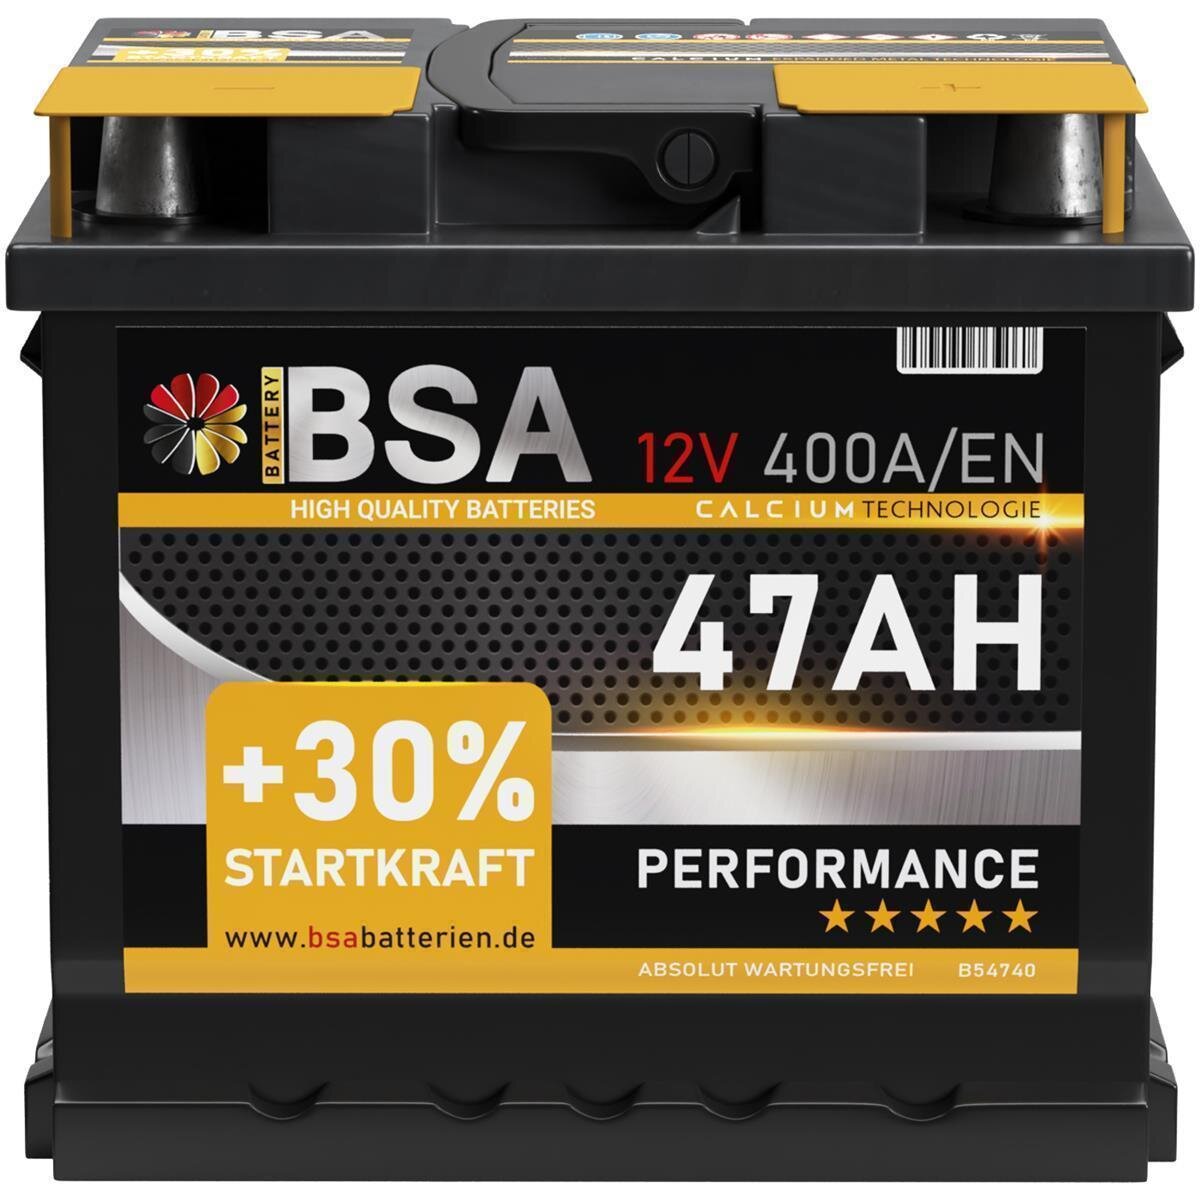 https://www.batteriescout.de/media/image/product/4128/lg/bsa-performance-autobatterie-47ah-12v.jpg